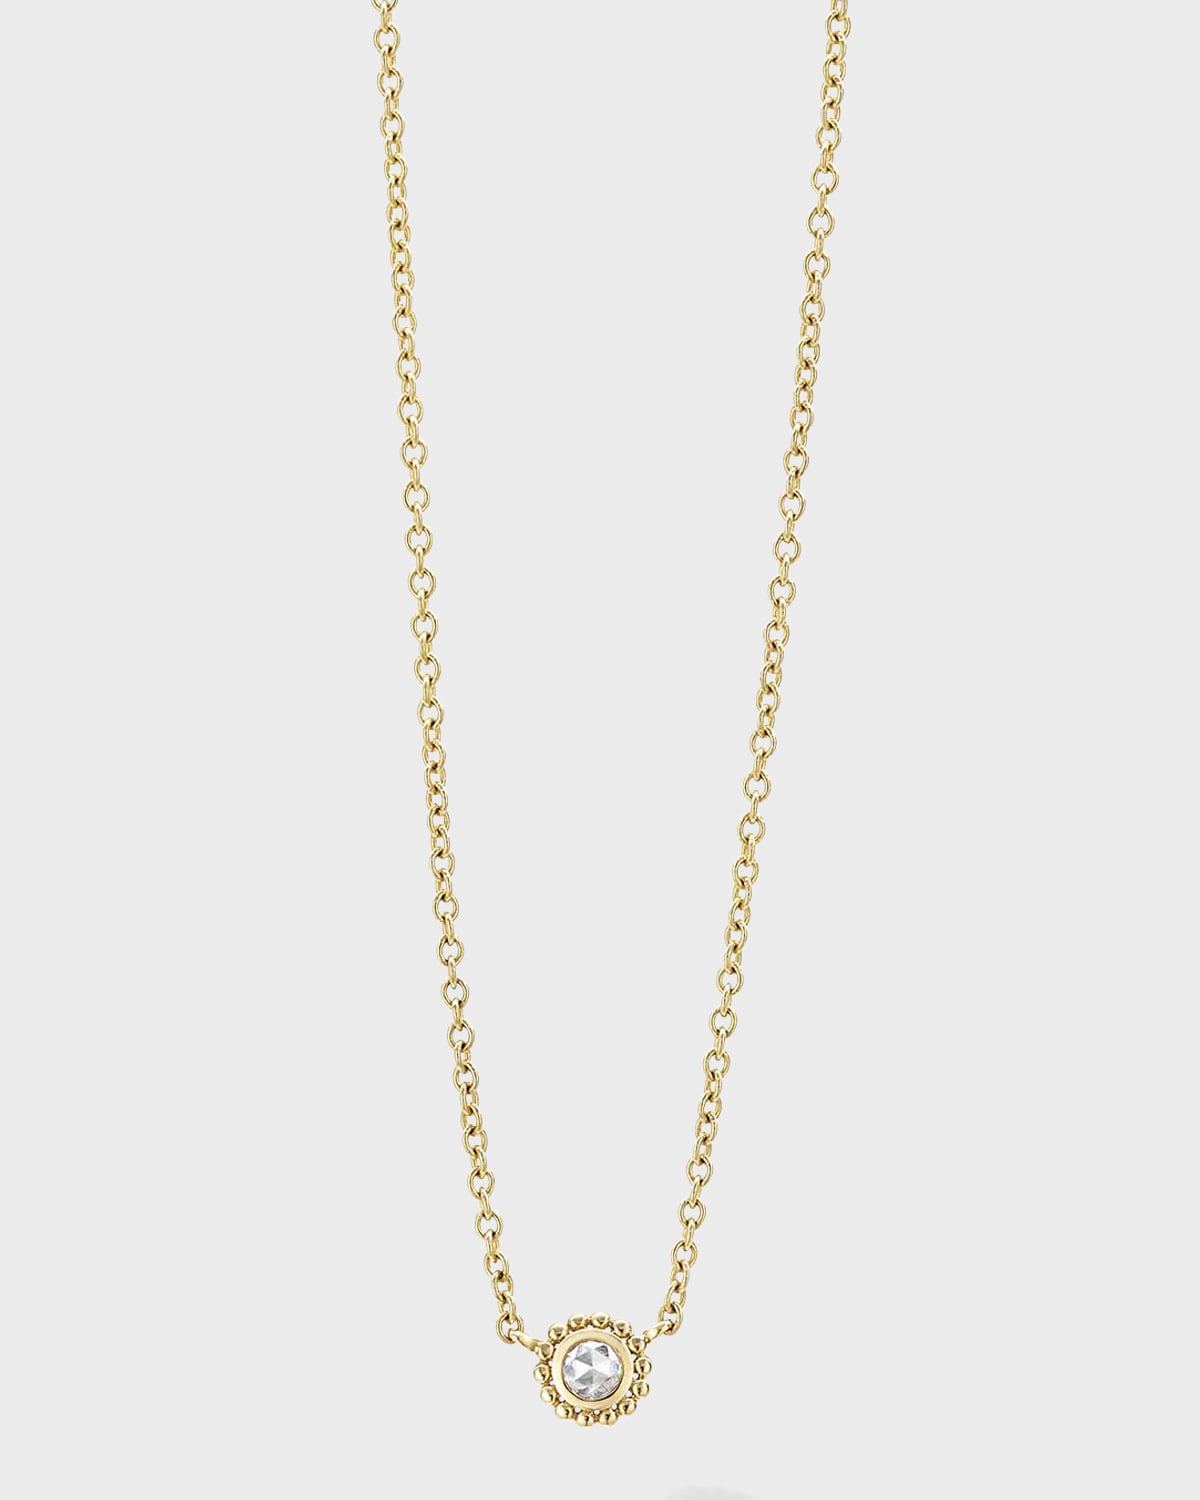 Covet Gold 3mm Rose-Cut Diamond Pendant Necklace